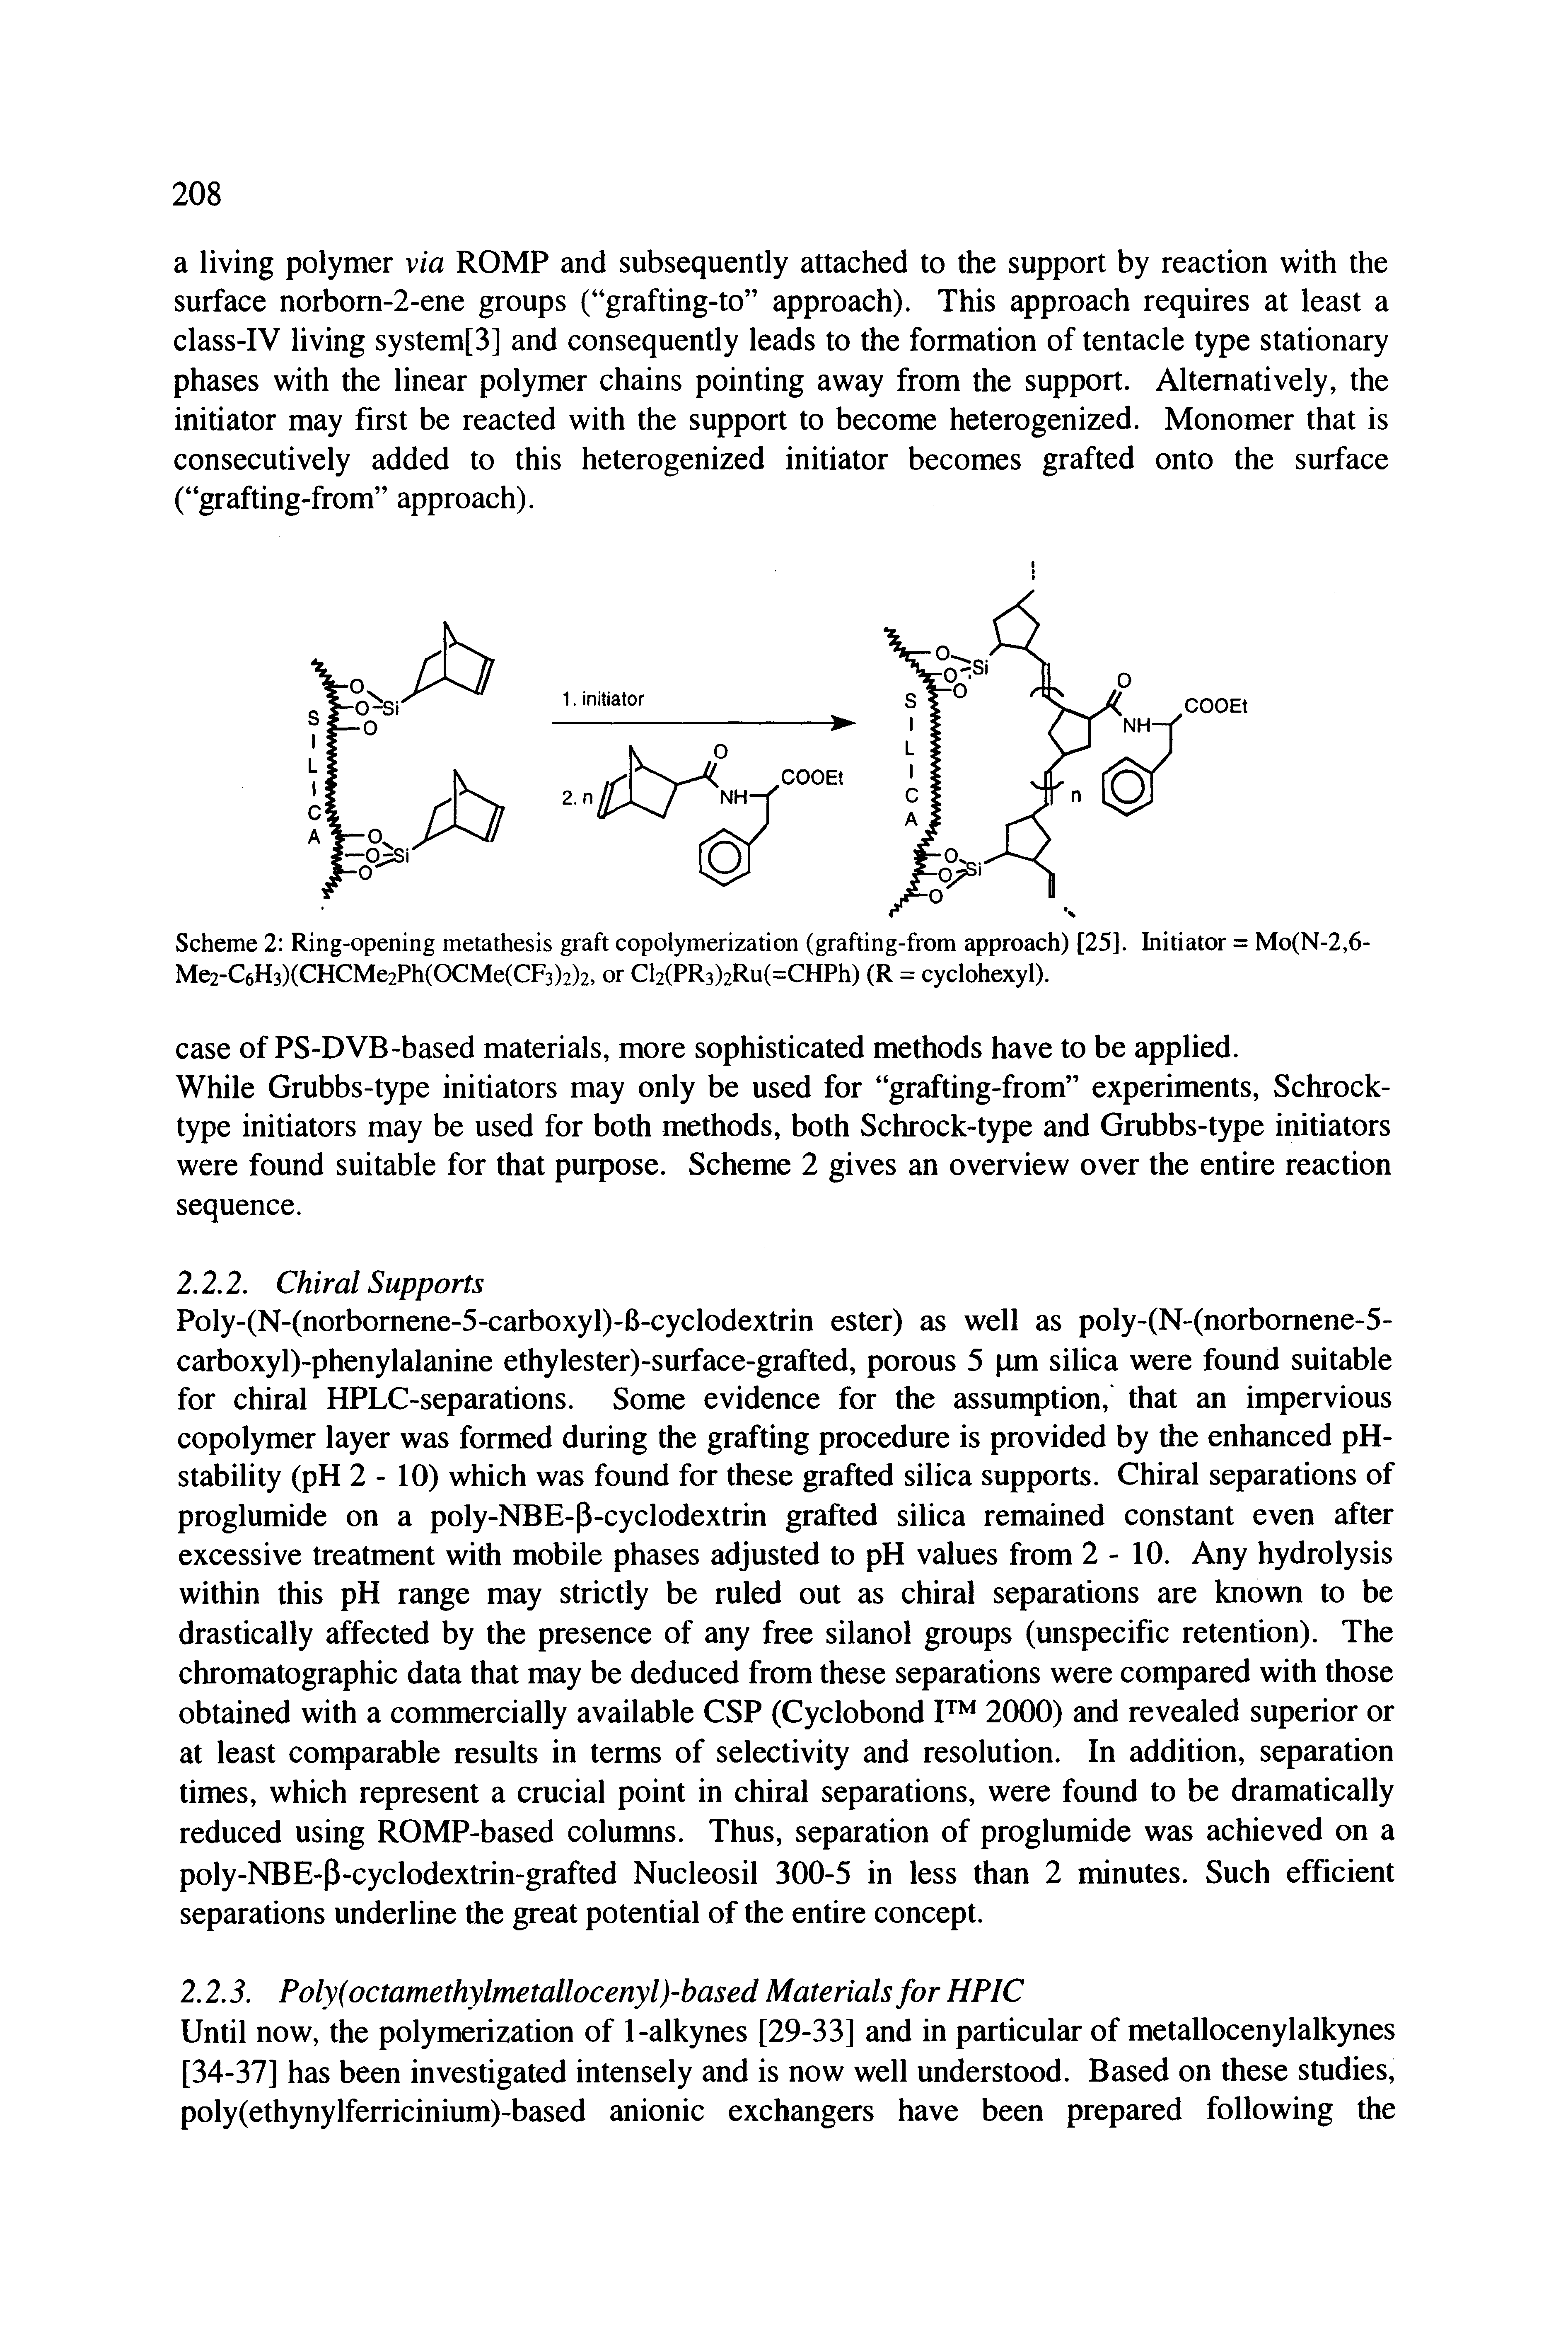 Scheme 2 Ring-opening metathesis graft copolymerization (grafting-from approach) [25]. Initiator = Mo(N-2,6-Me2-C6H3)(CHCMe2Ph(OCMe(CF3)2)2, or Cl2(PR3)2Ru(=CHPh) (R = cyclohexyl).